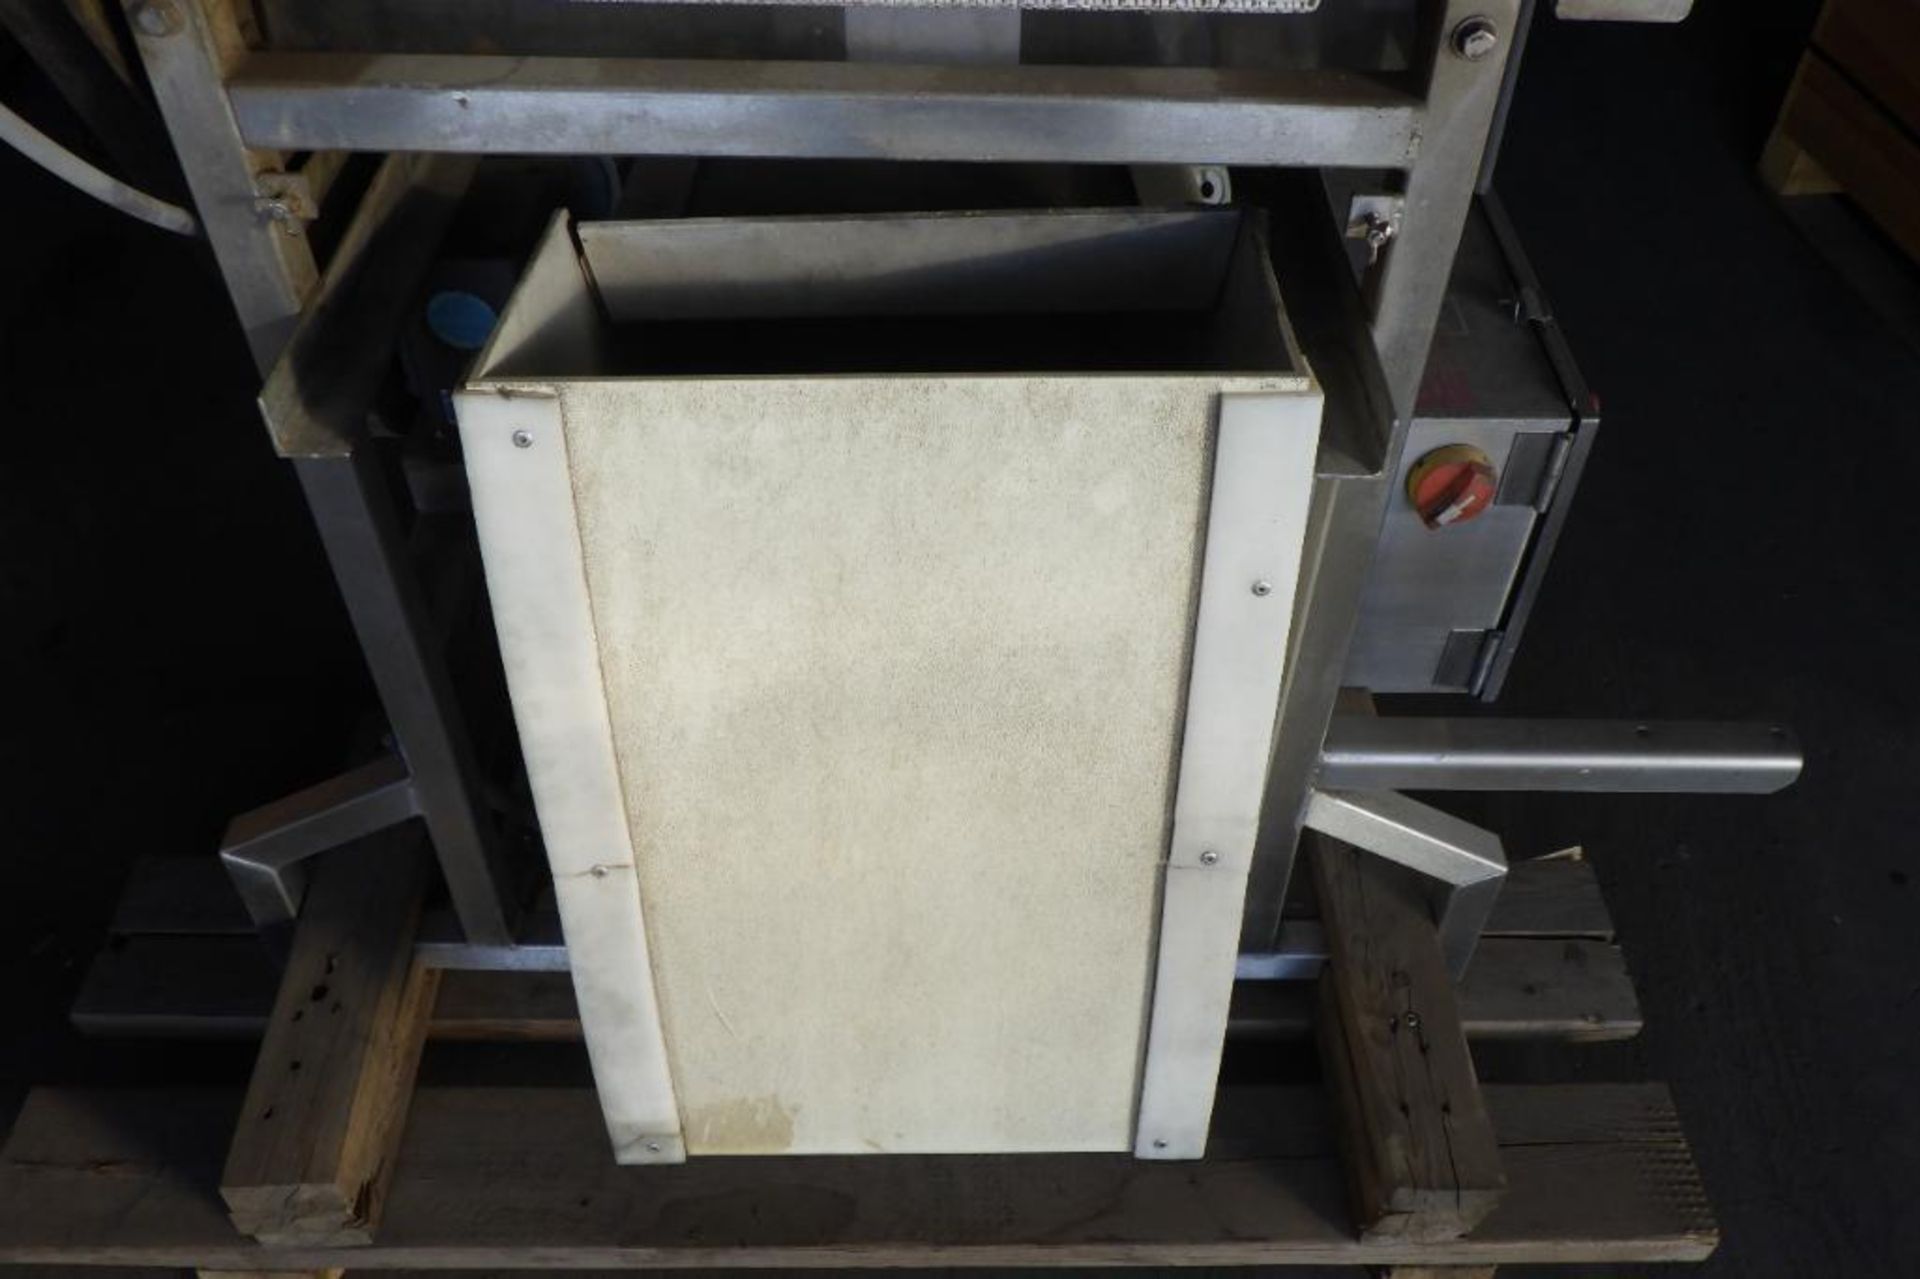 Safeline metal detector with conveyor - Image 14 of 16